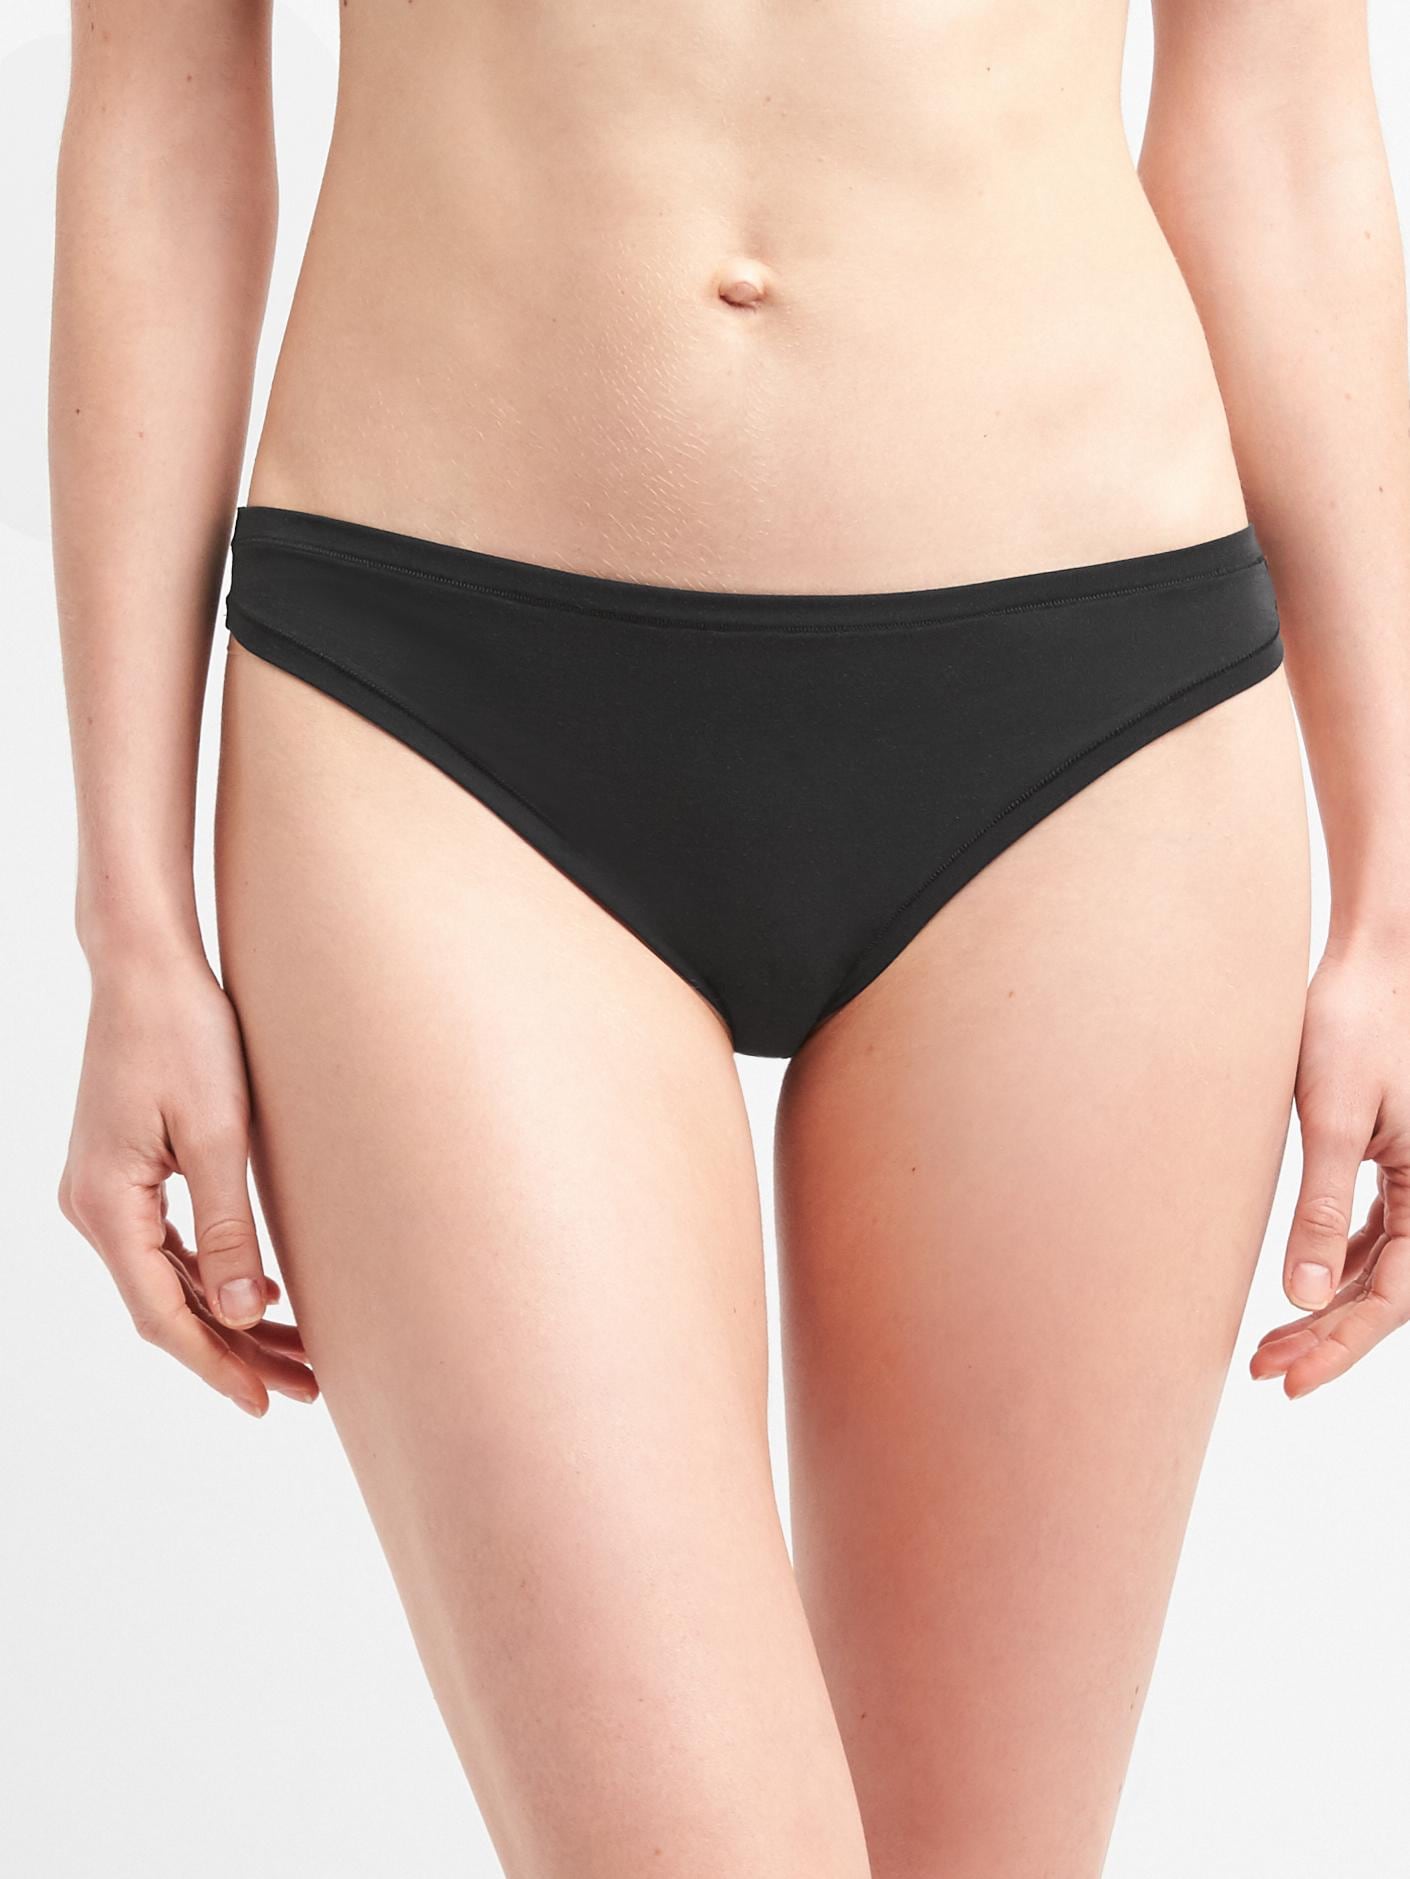 New Gap 5-Pack Cotton Spandex Breeze Thong Underwear Panties